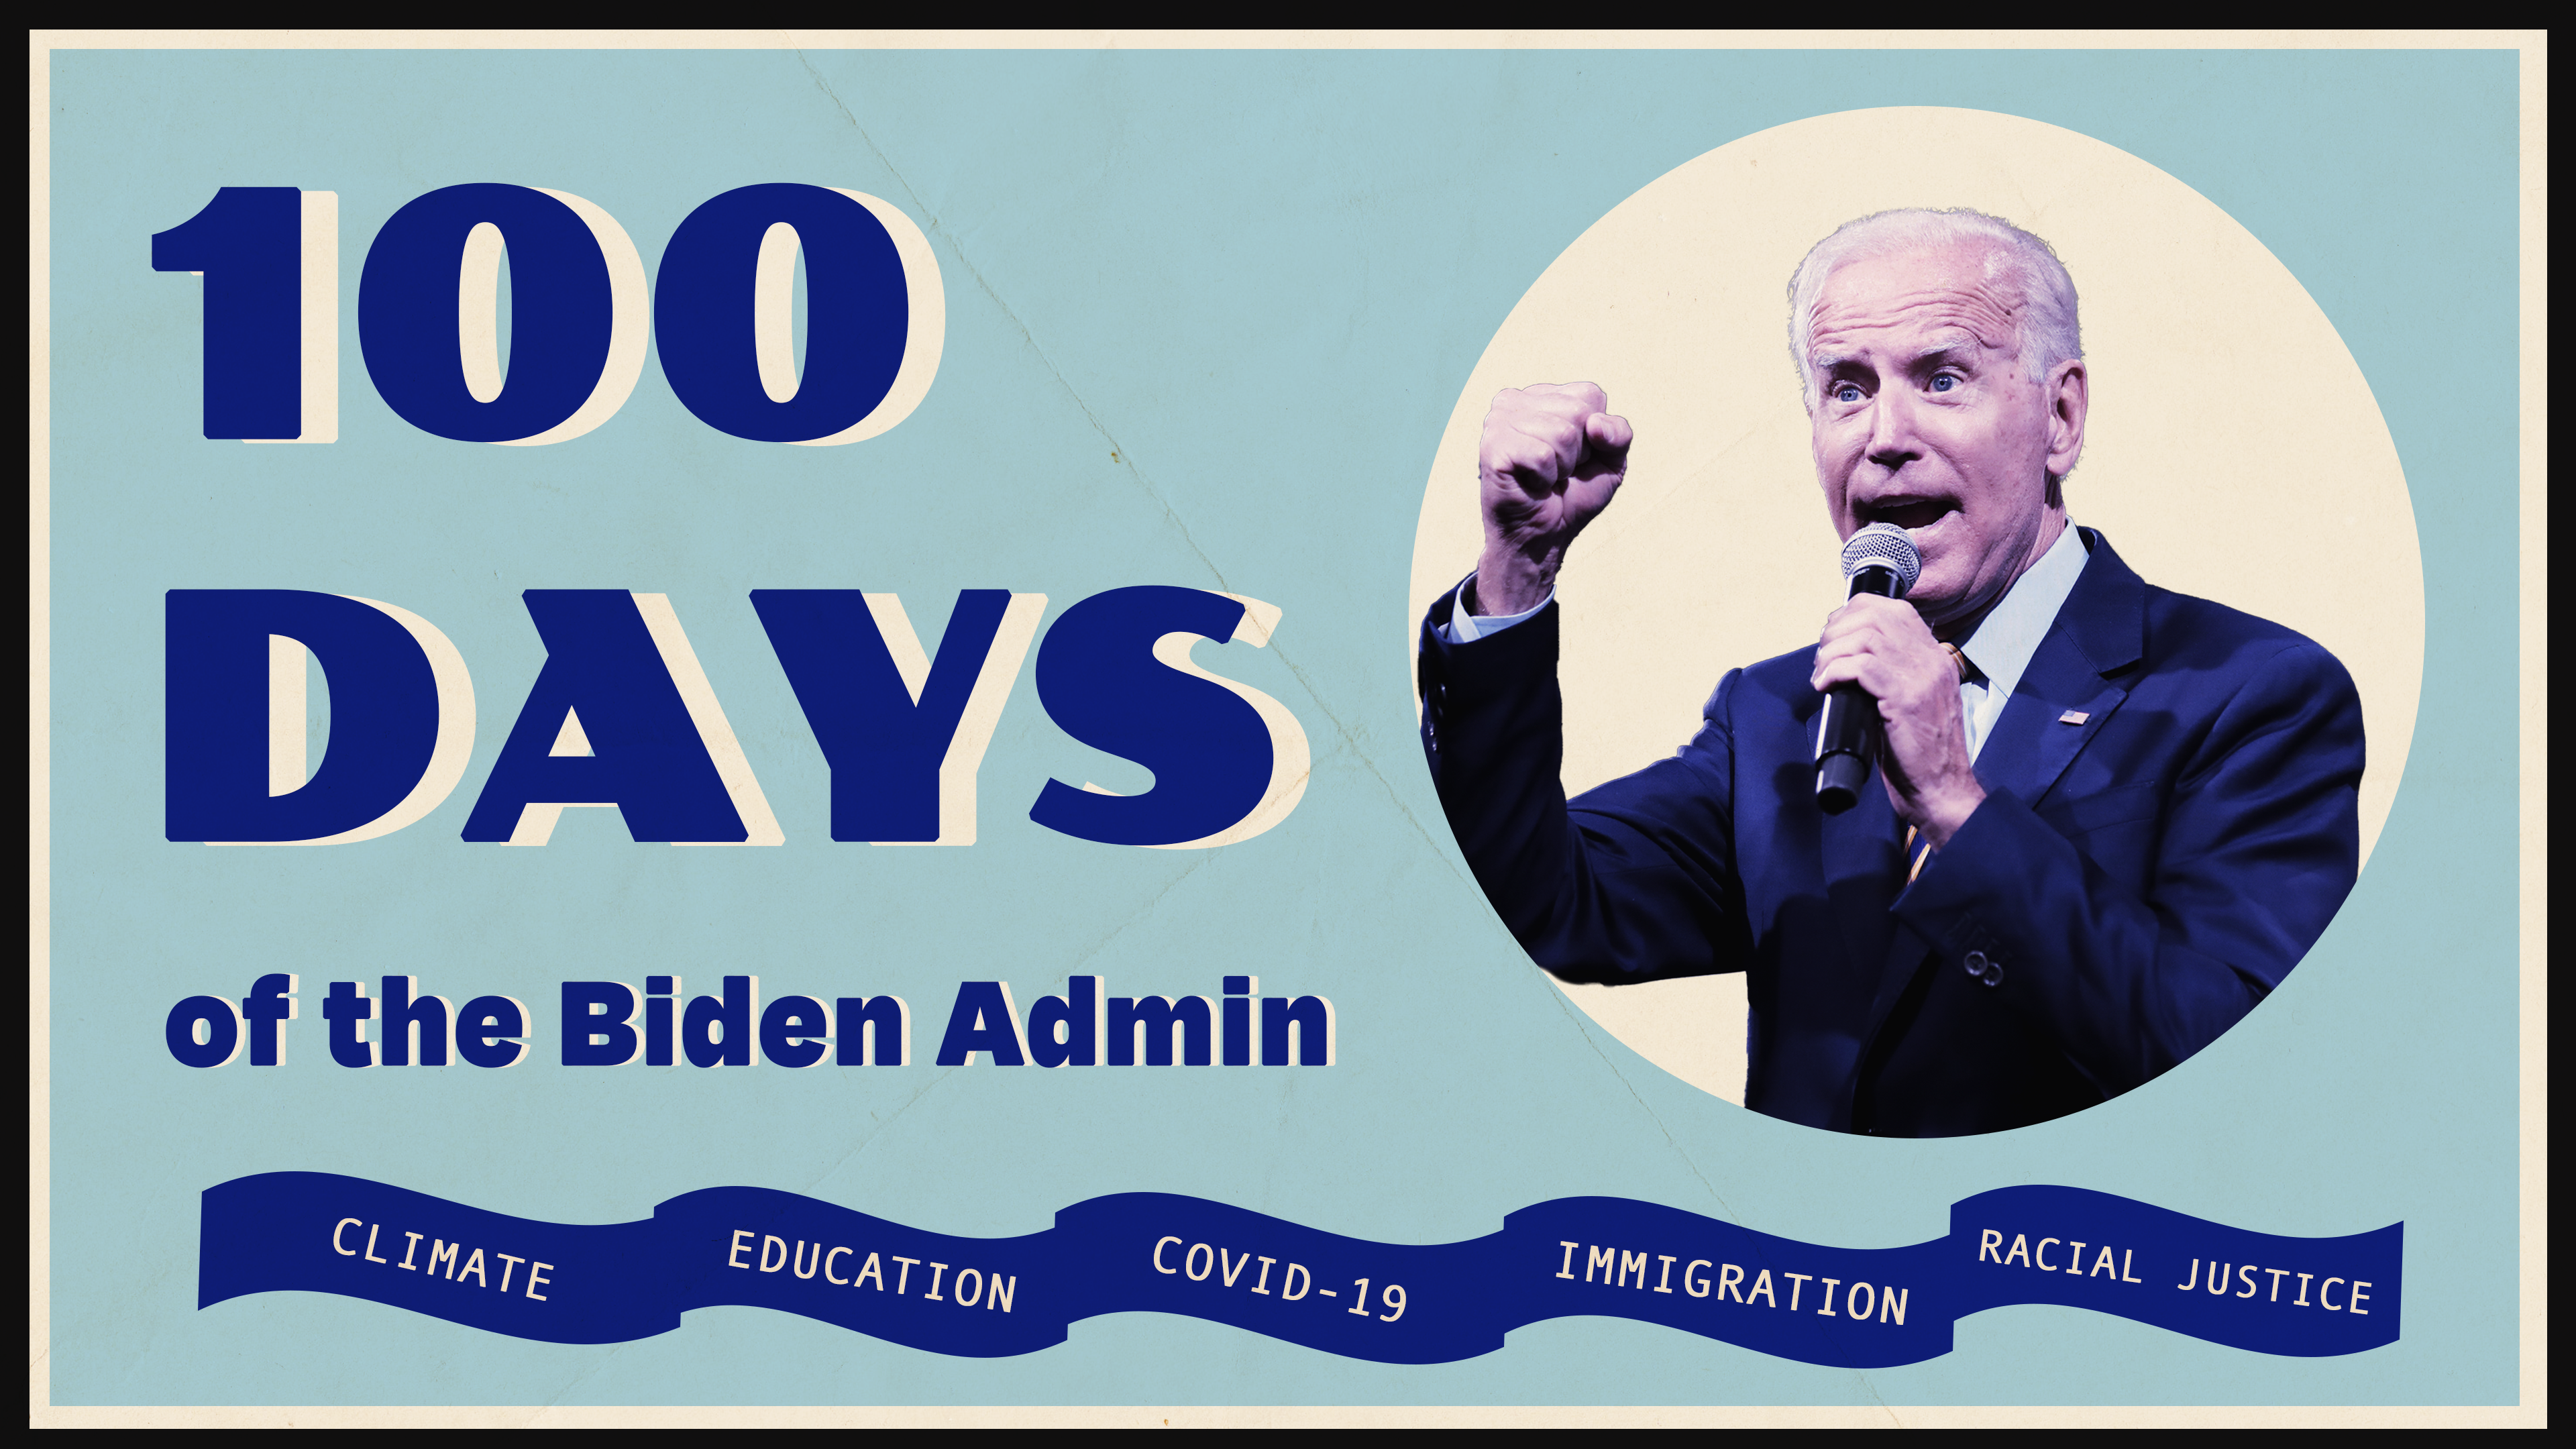 Graphic of Joe Biden next to the words "100 Days of the Biden Admin."